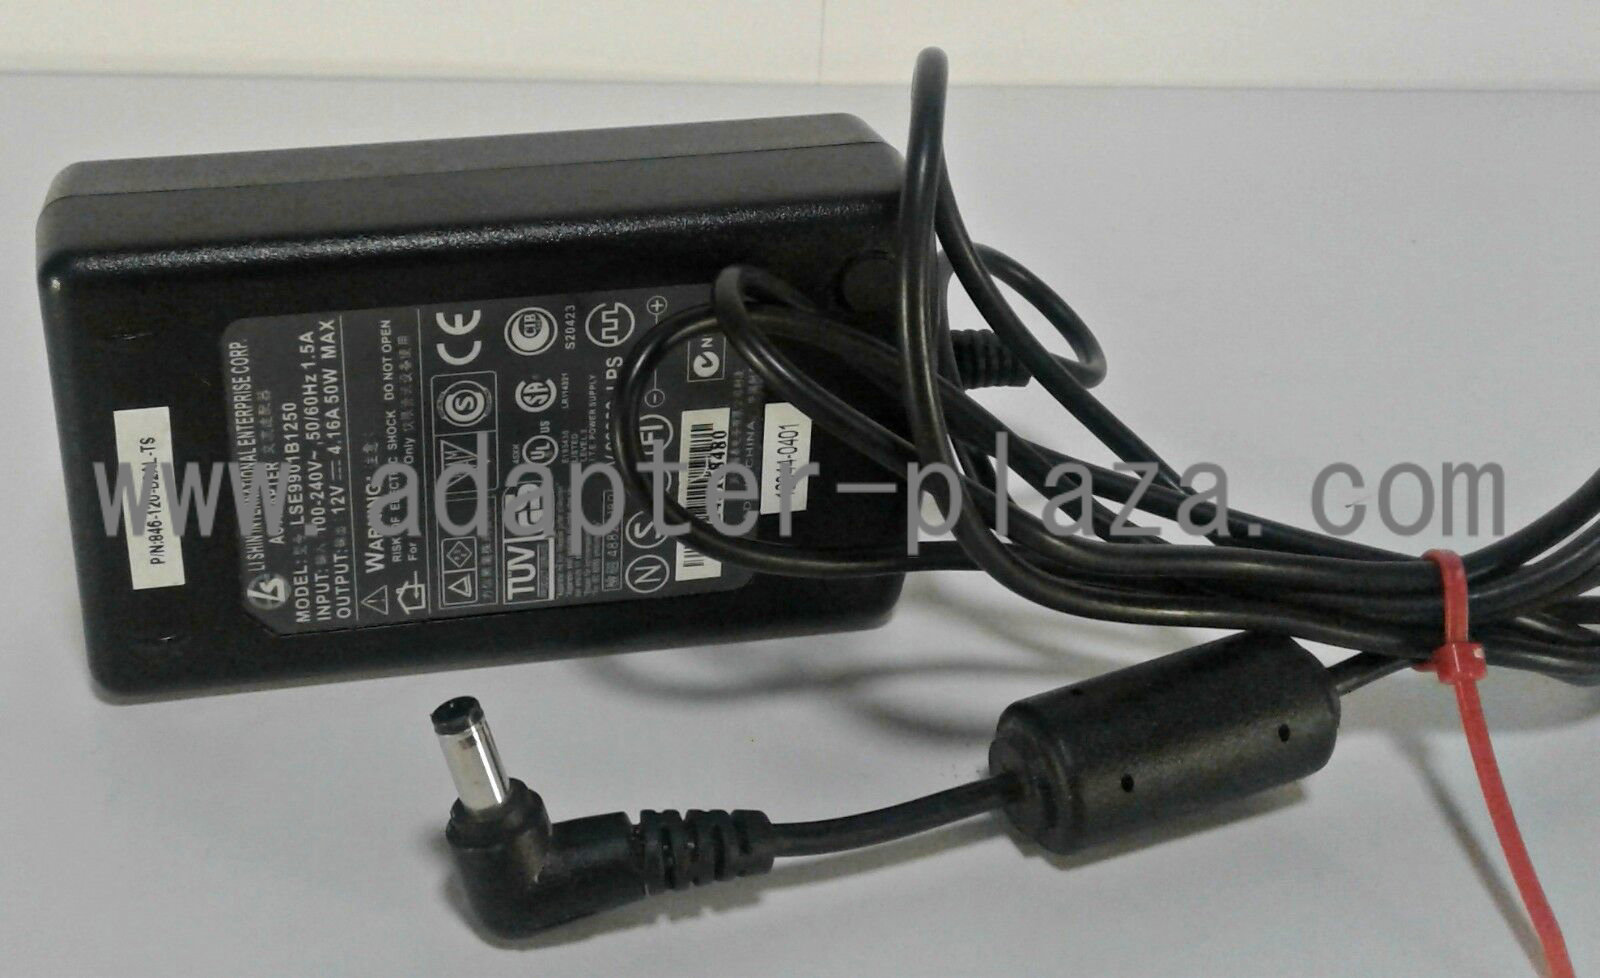 New Genuine LI SHIN LSE9901B1250 12V 4.16A 50W AC Adapter for LCD Monitors VG150 VP140 VG151